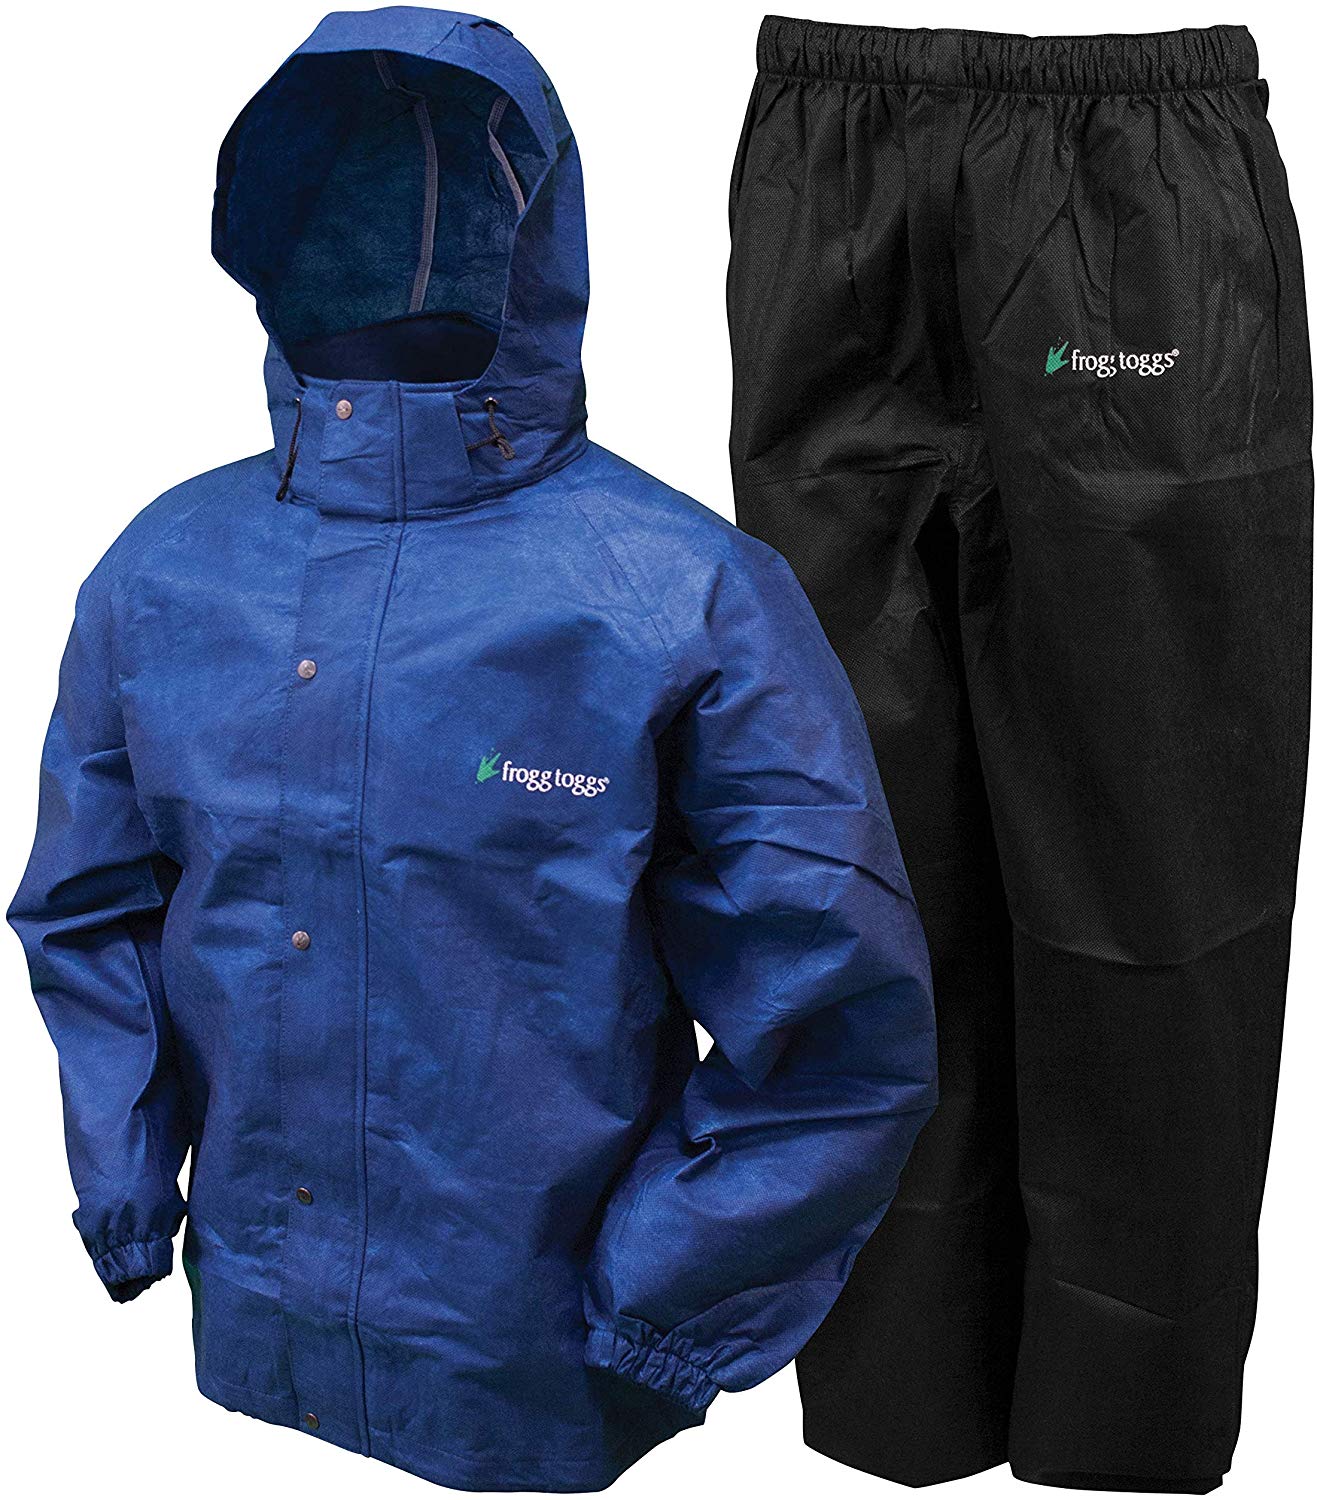 Frogg Toggs, Frogg Toggs All Sport Rain Suit, giacca blu reale/pantaloni neri, taglia piccola